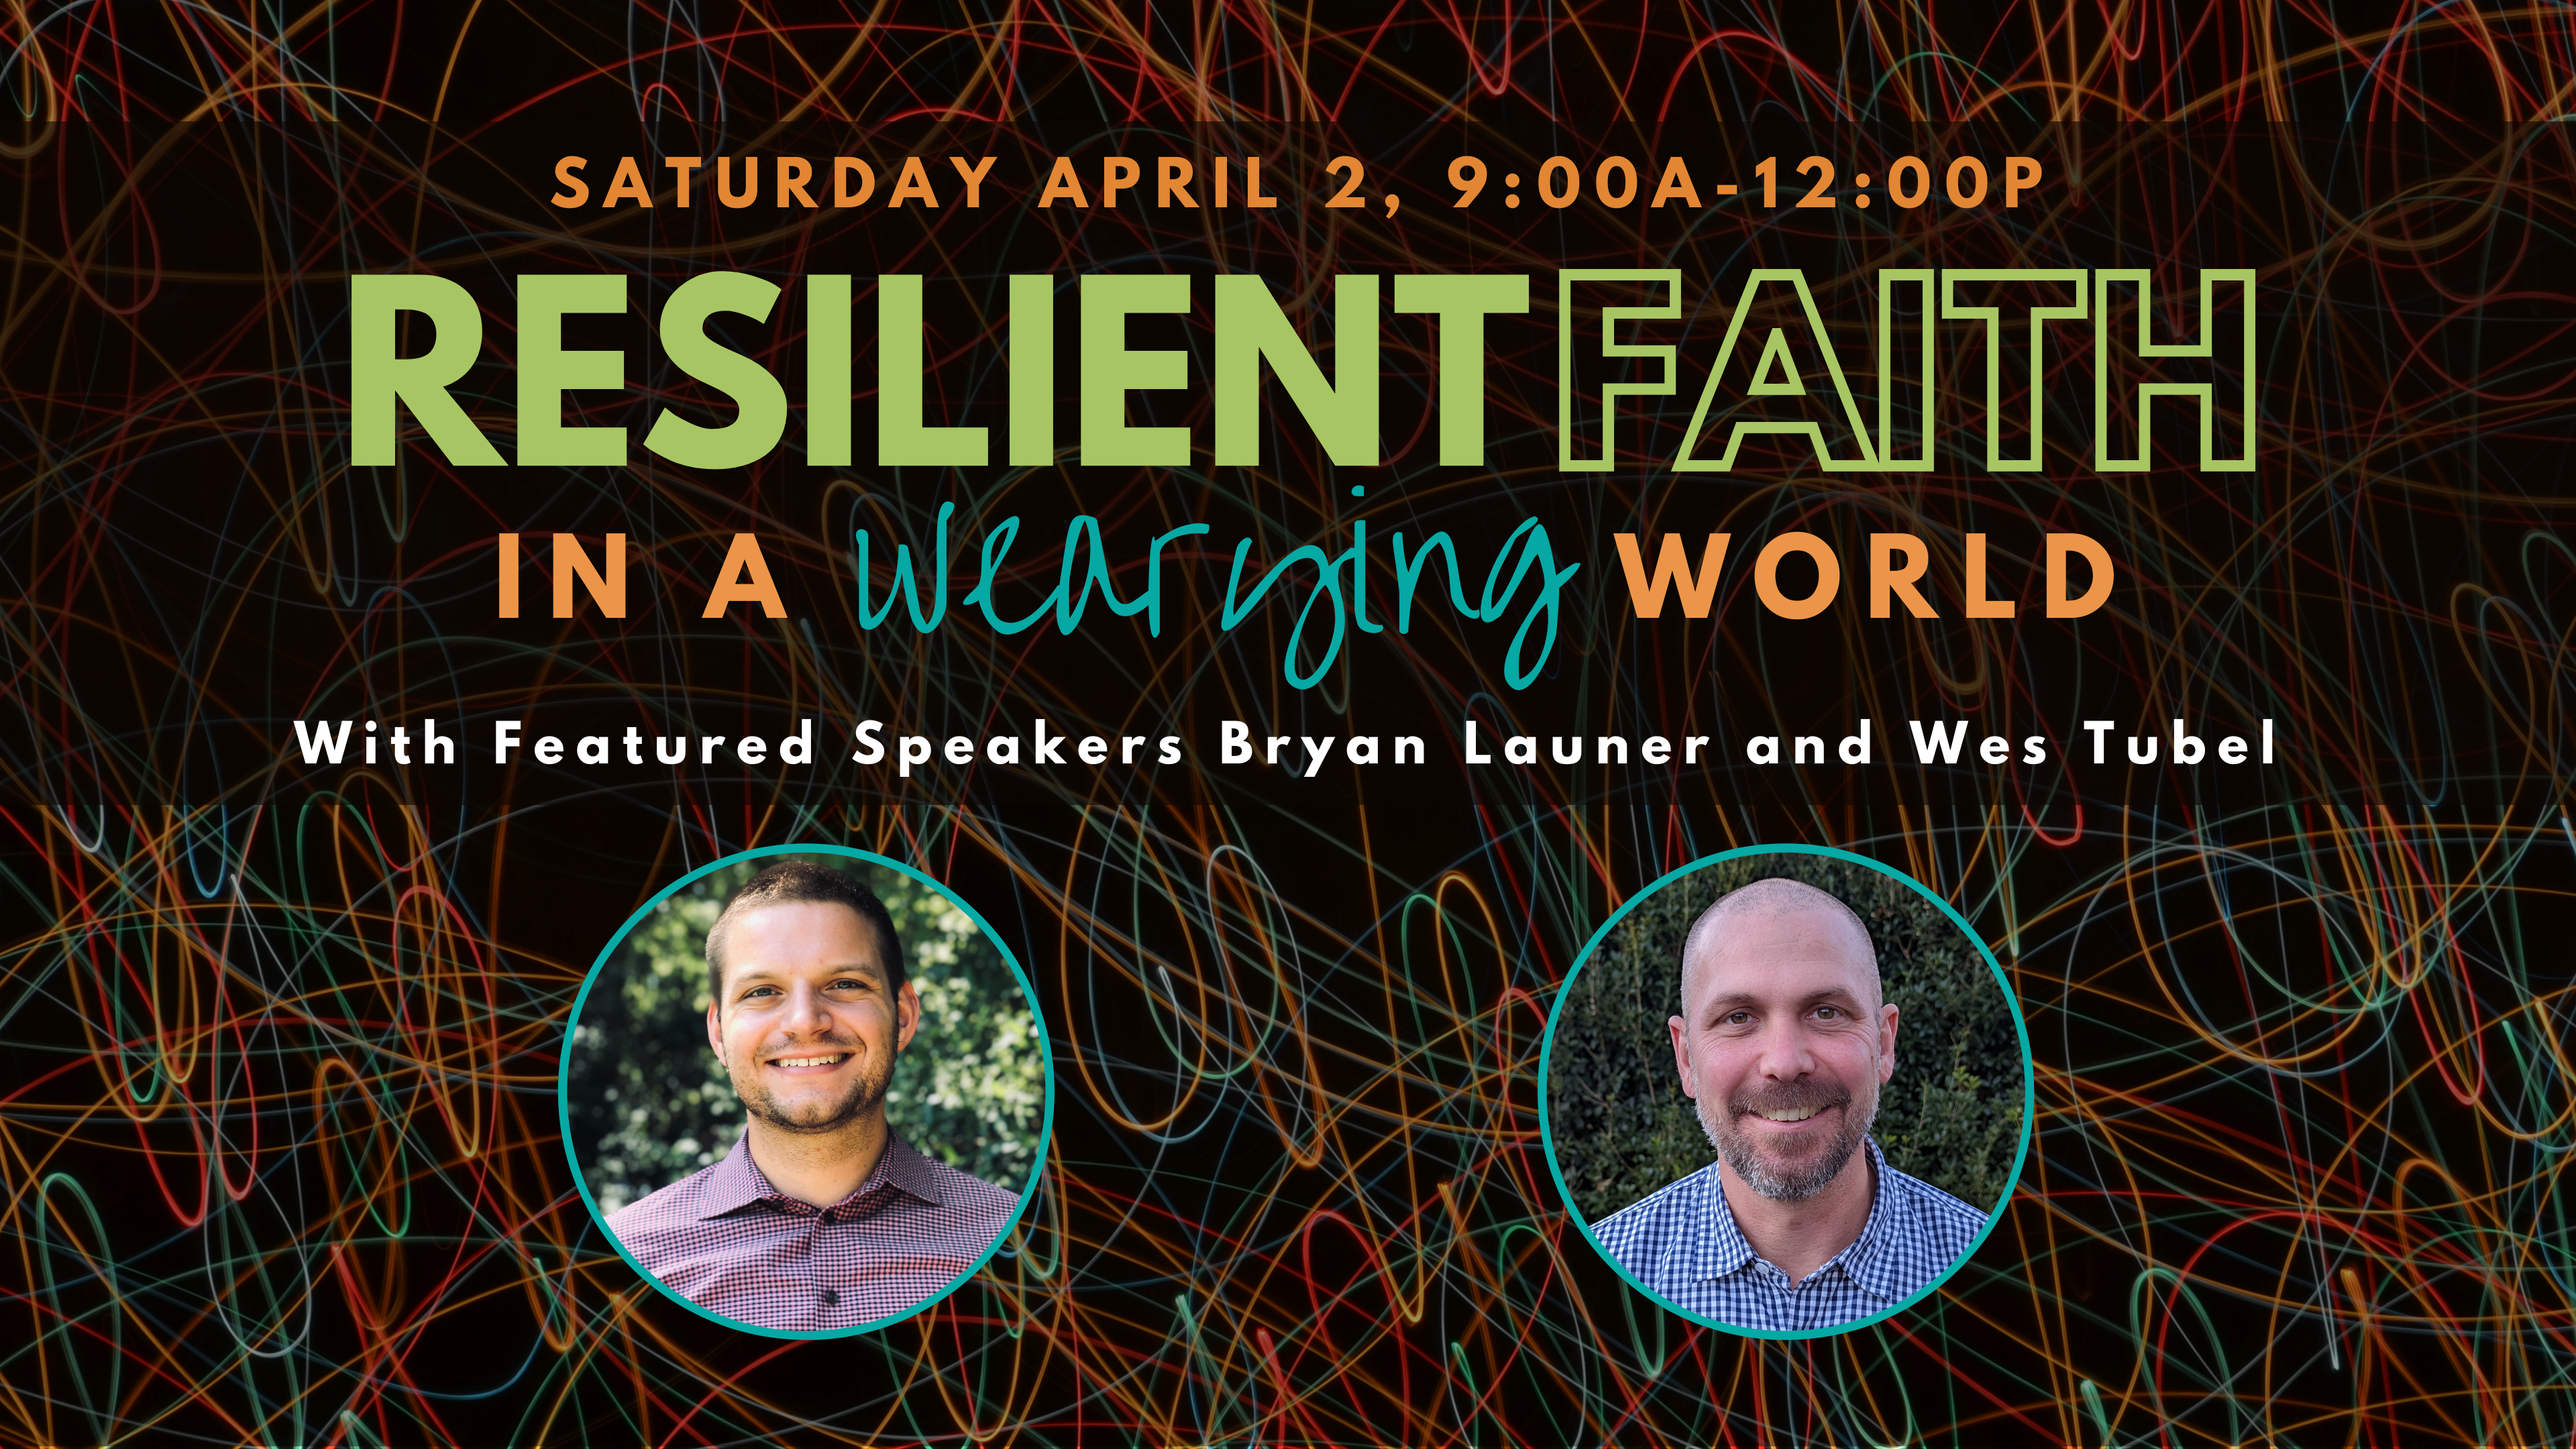 Upcoming Resilient Faith Seminar